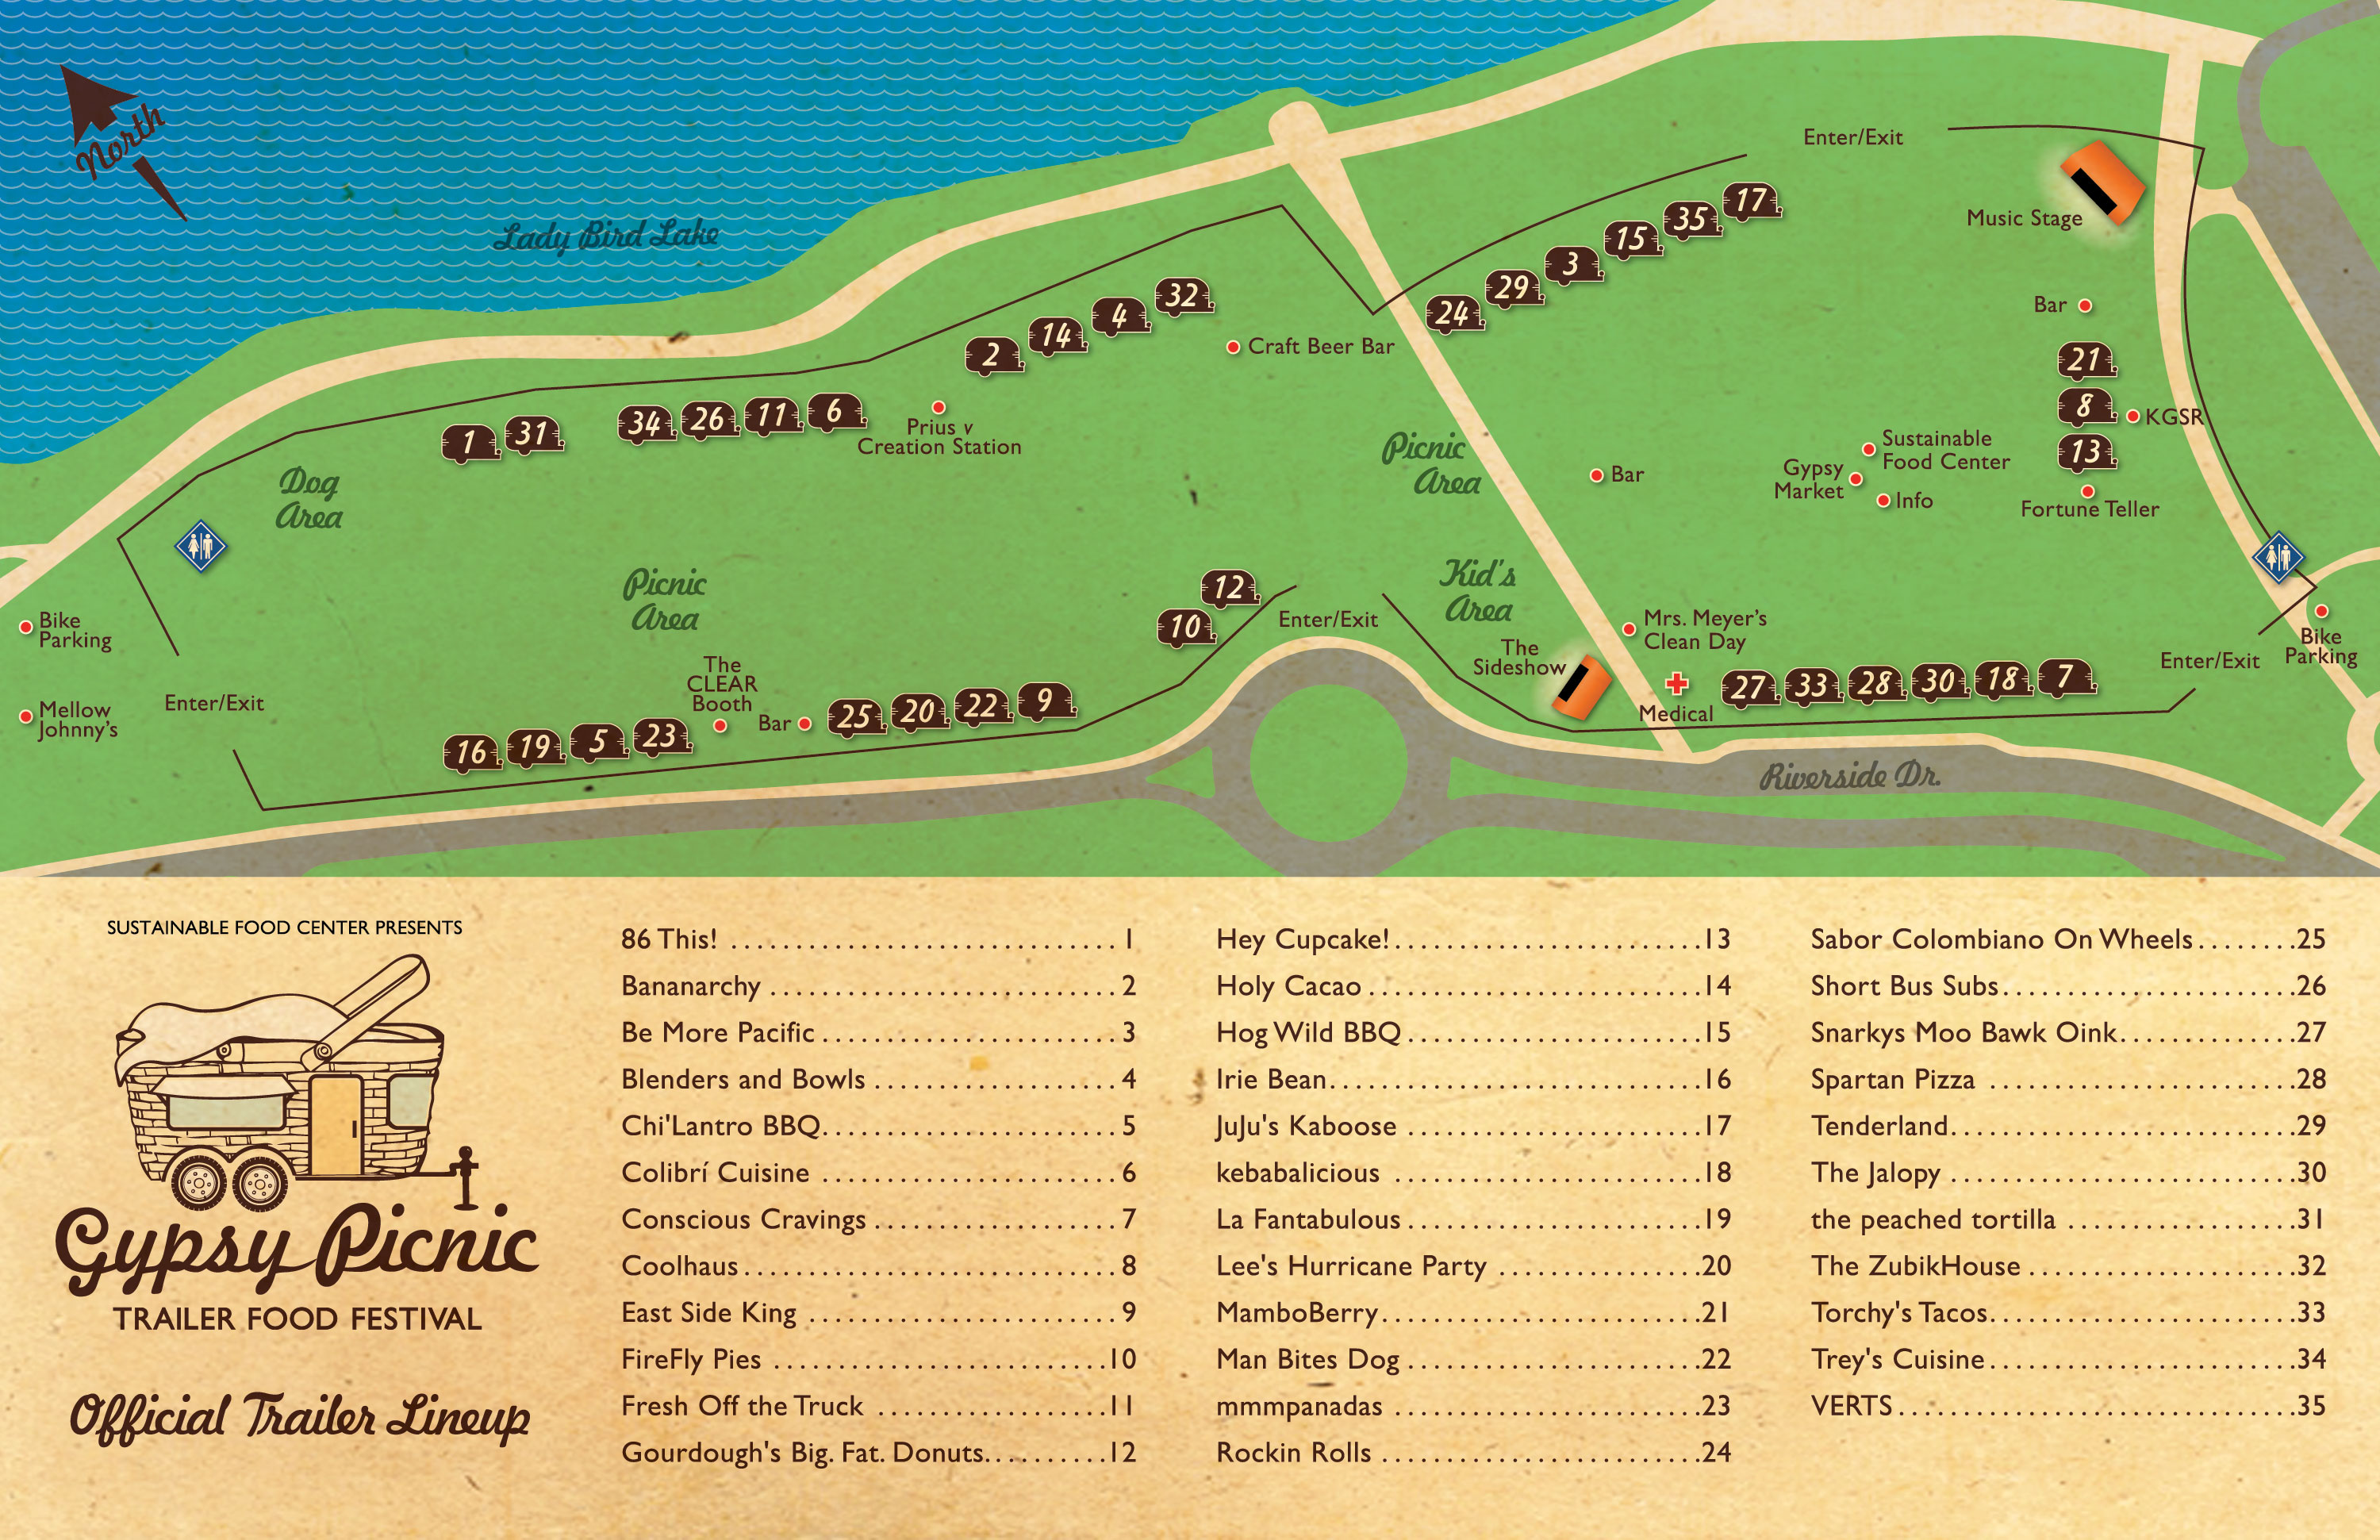 2011 gypsy picnic map